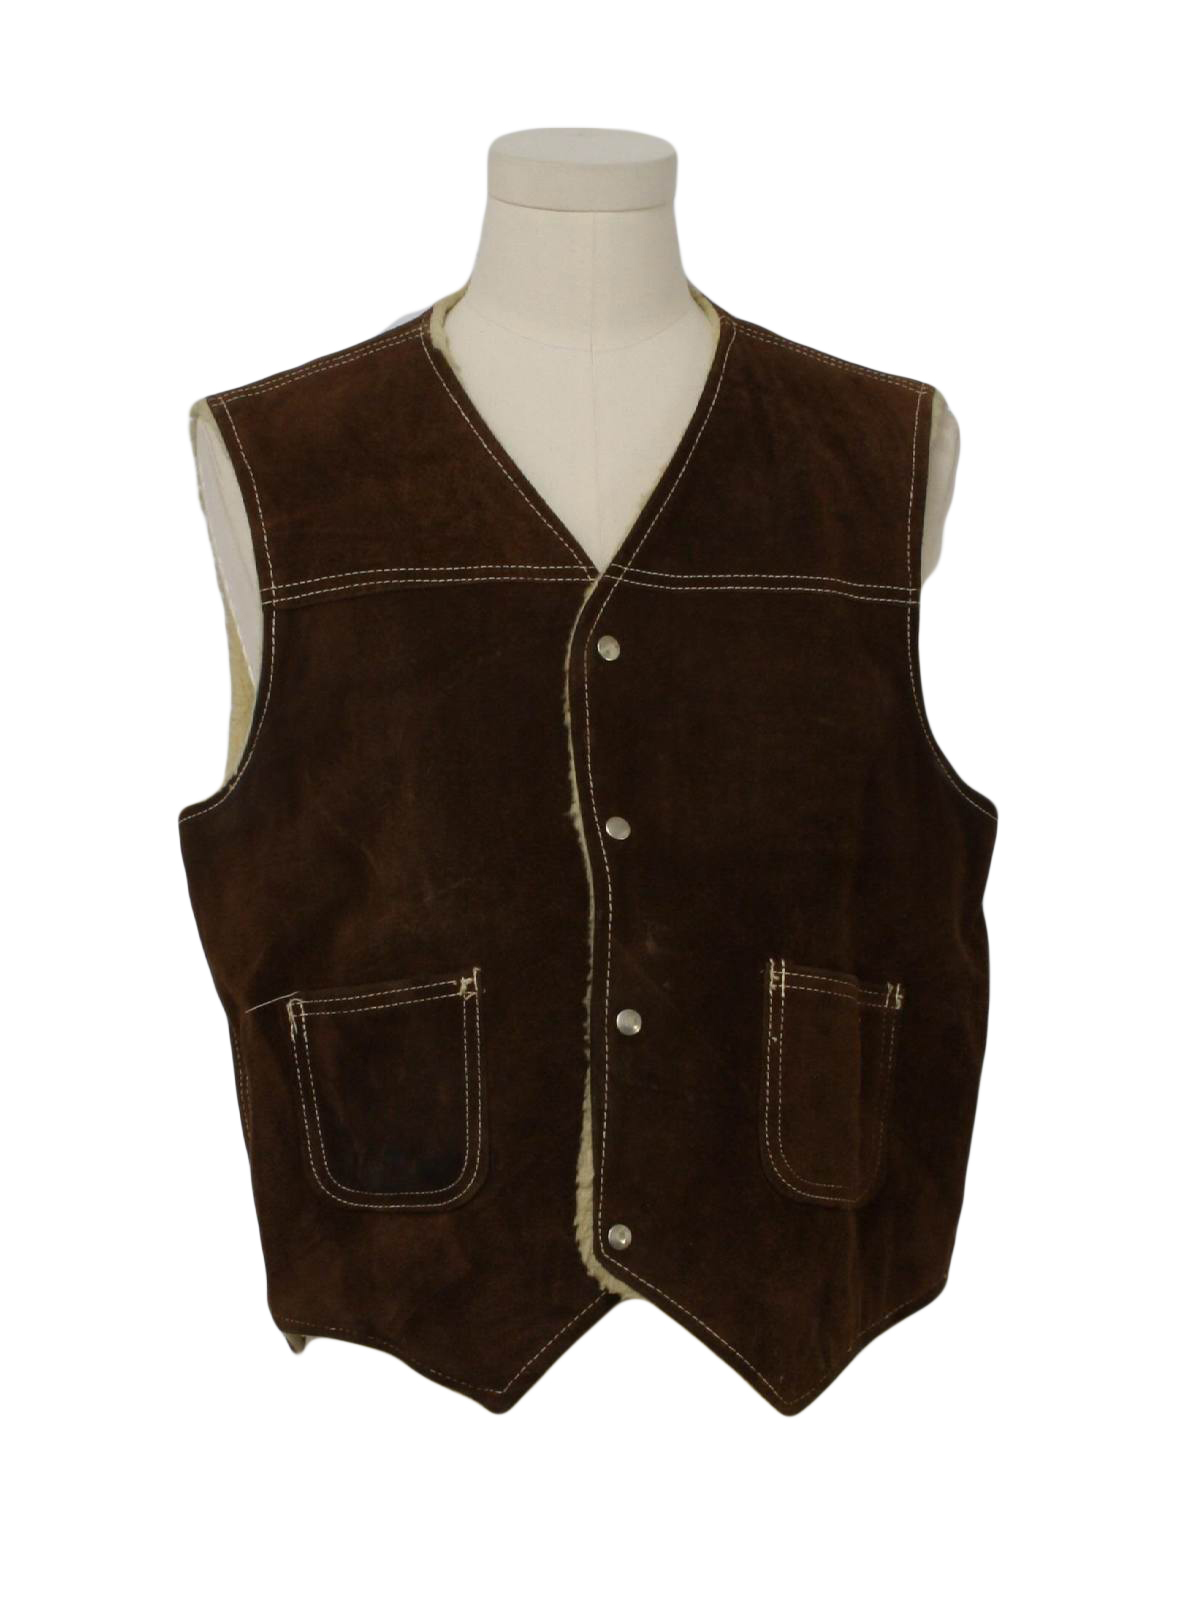 J C Penney Seventies Vintage Vest: 70s -J C Penney- Mens brown suede ...